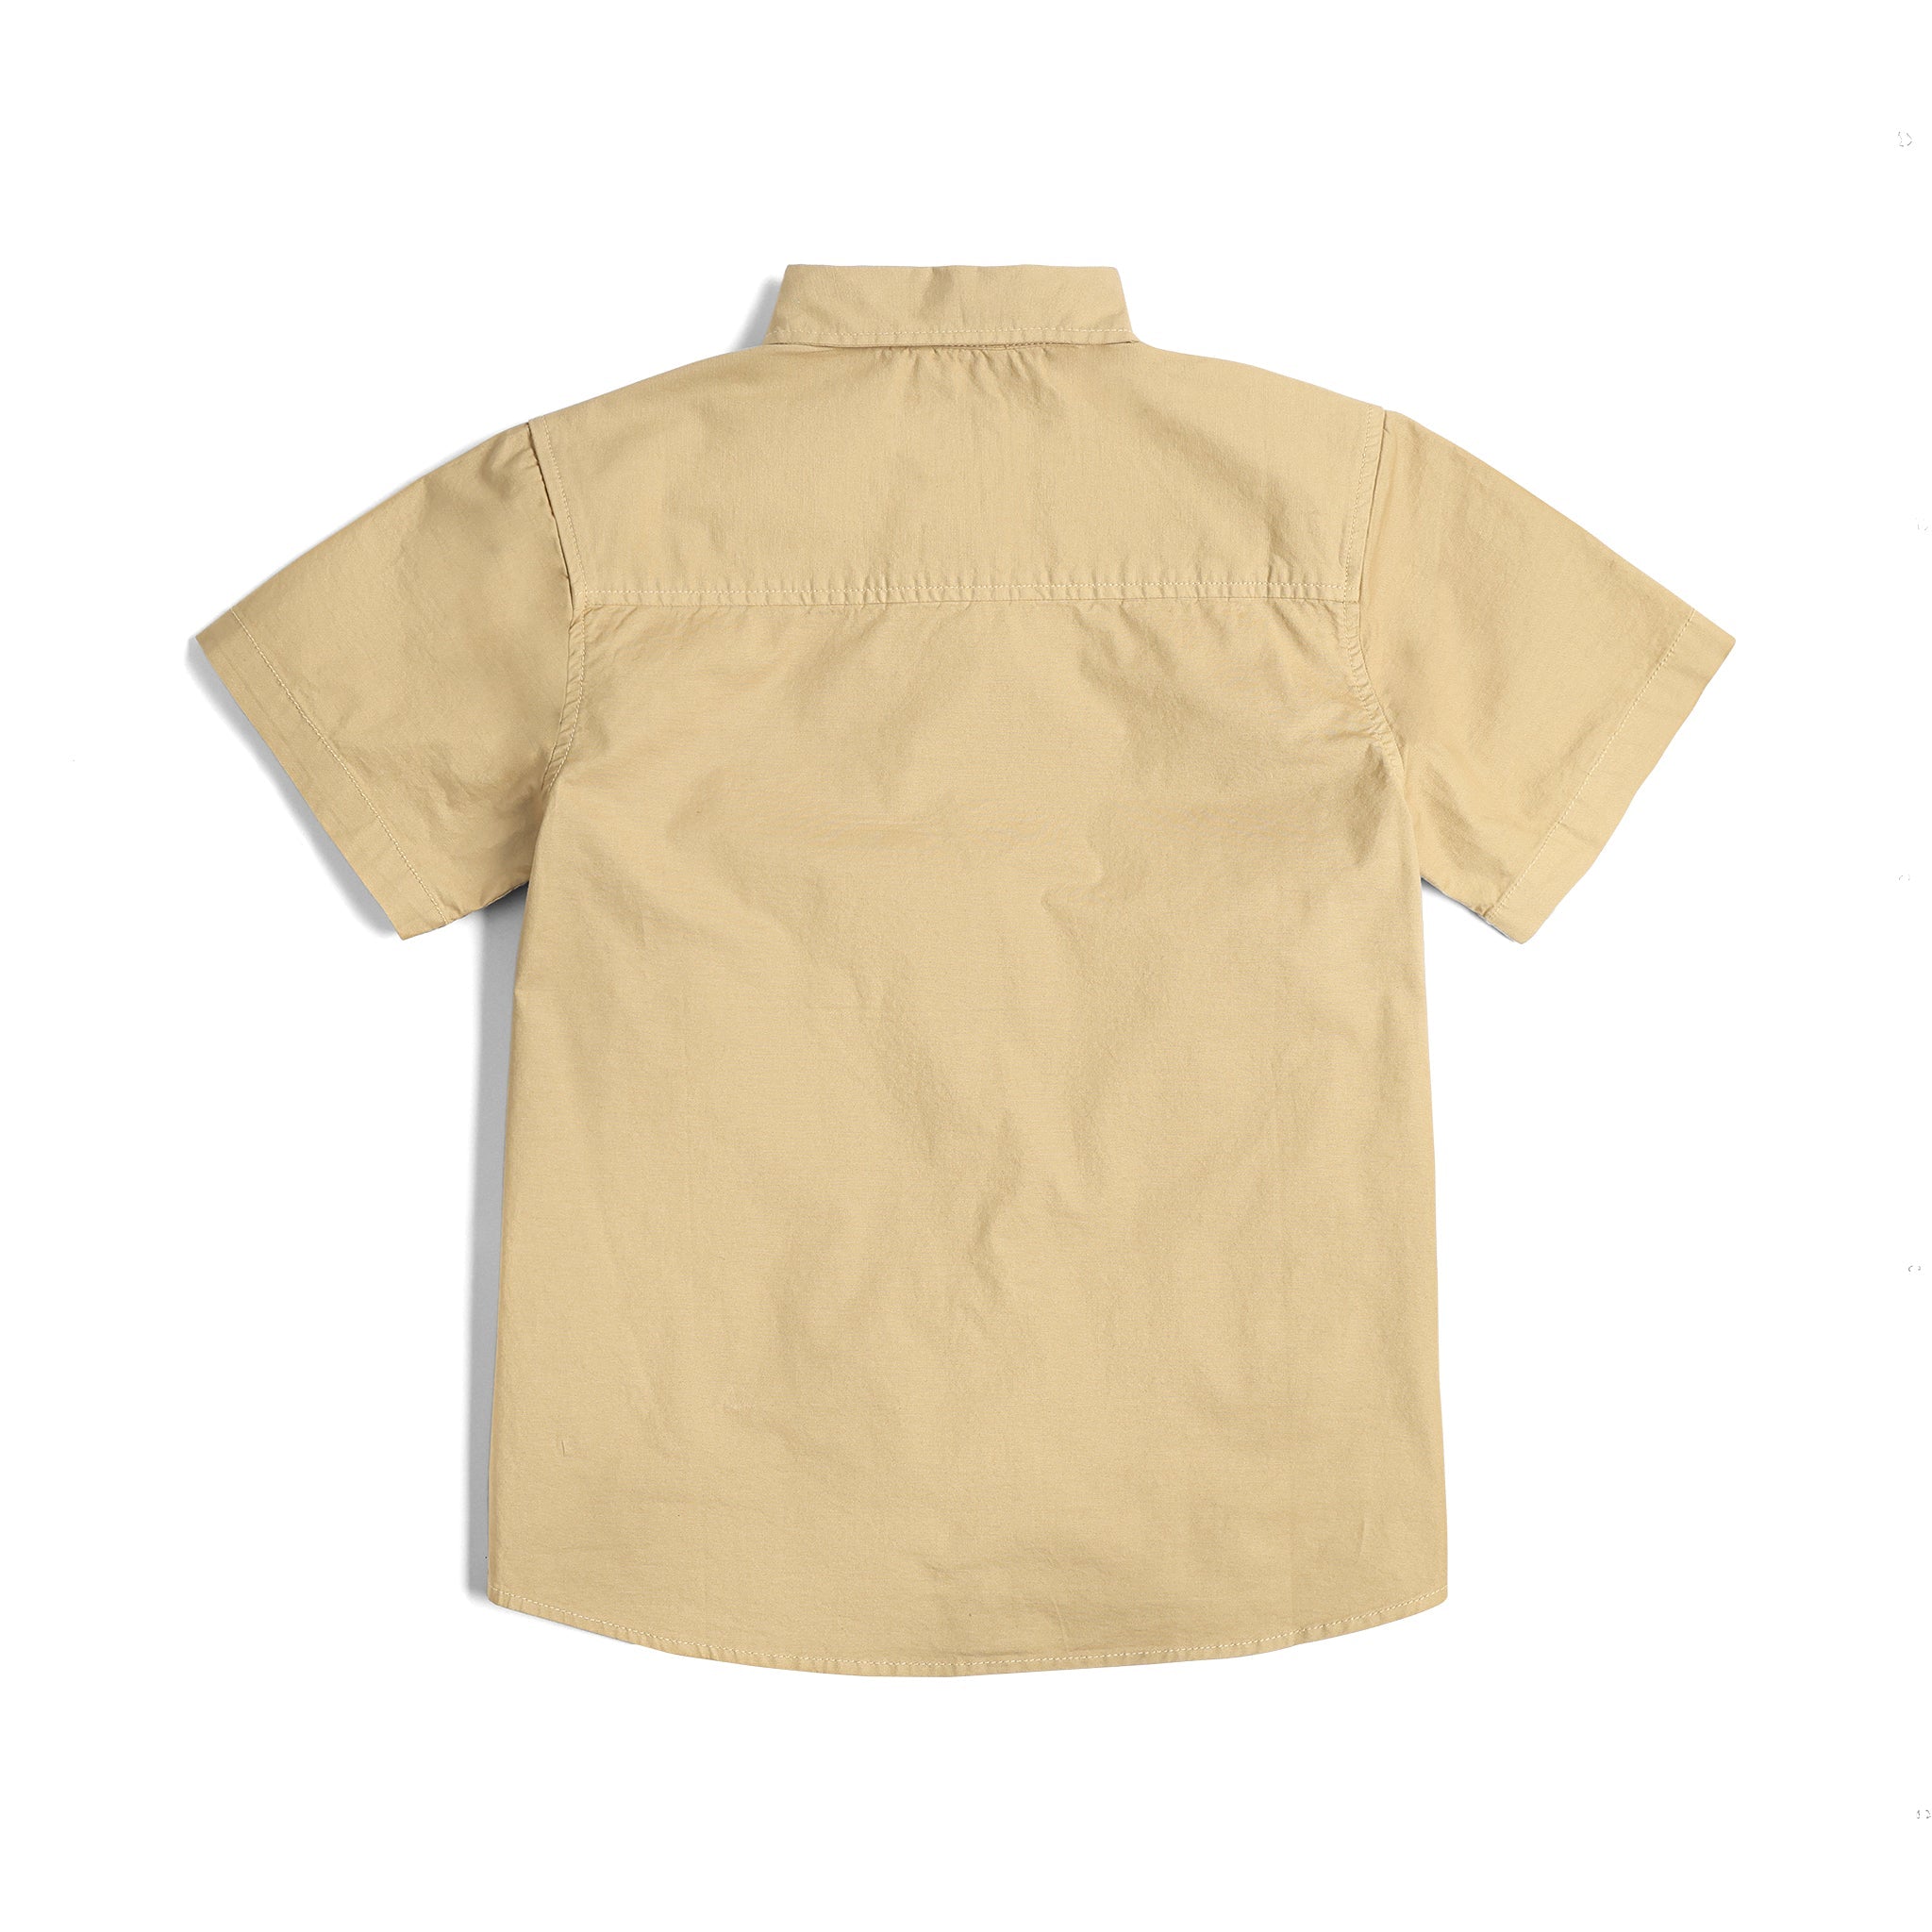 Back View of Topo Designs Dirt Desert Shirt Ss - Women's in "Sahara"